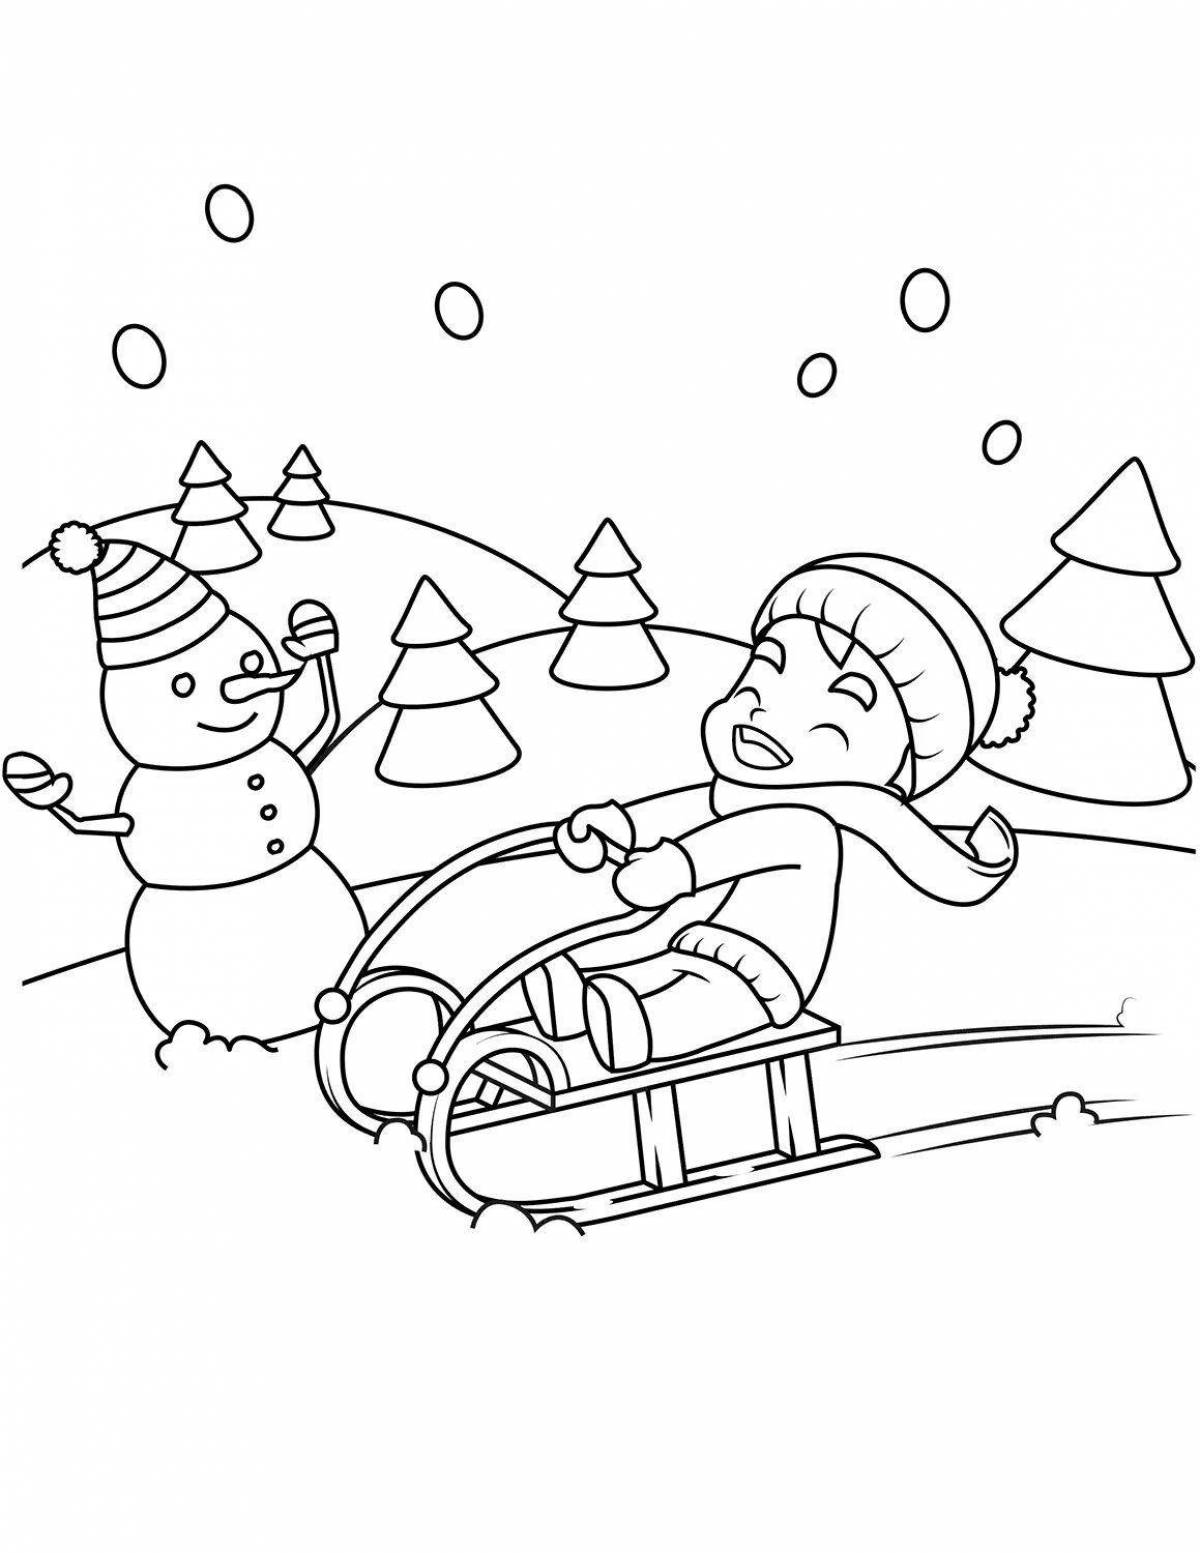 Coloring page joyful snow slide